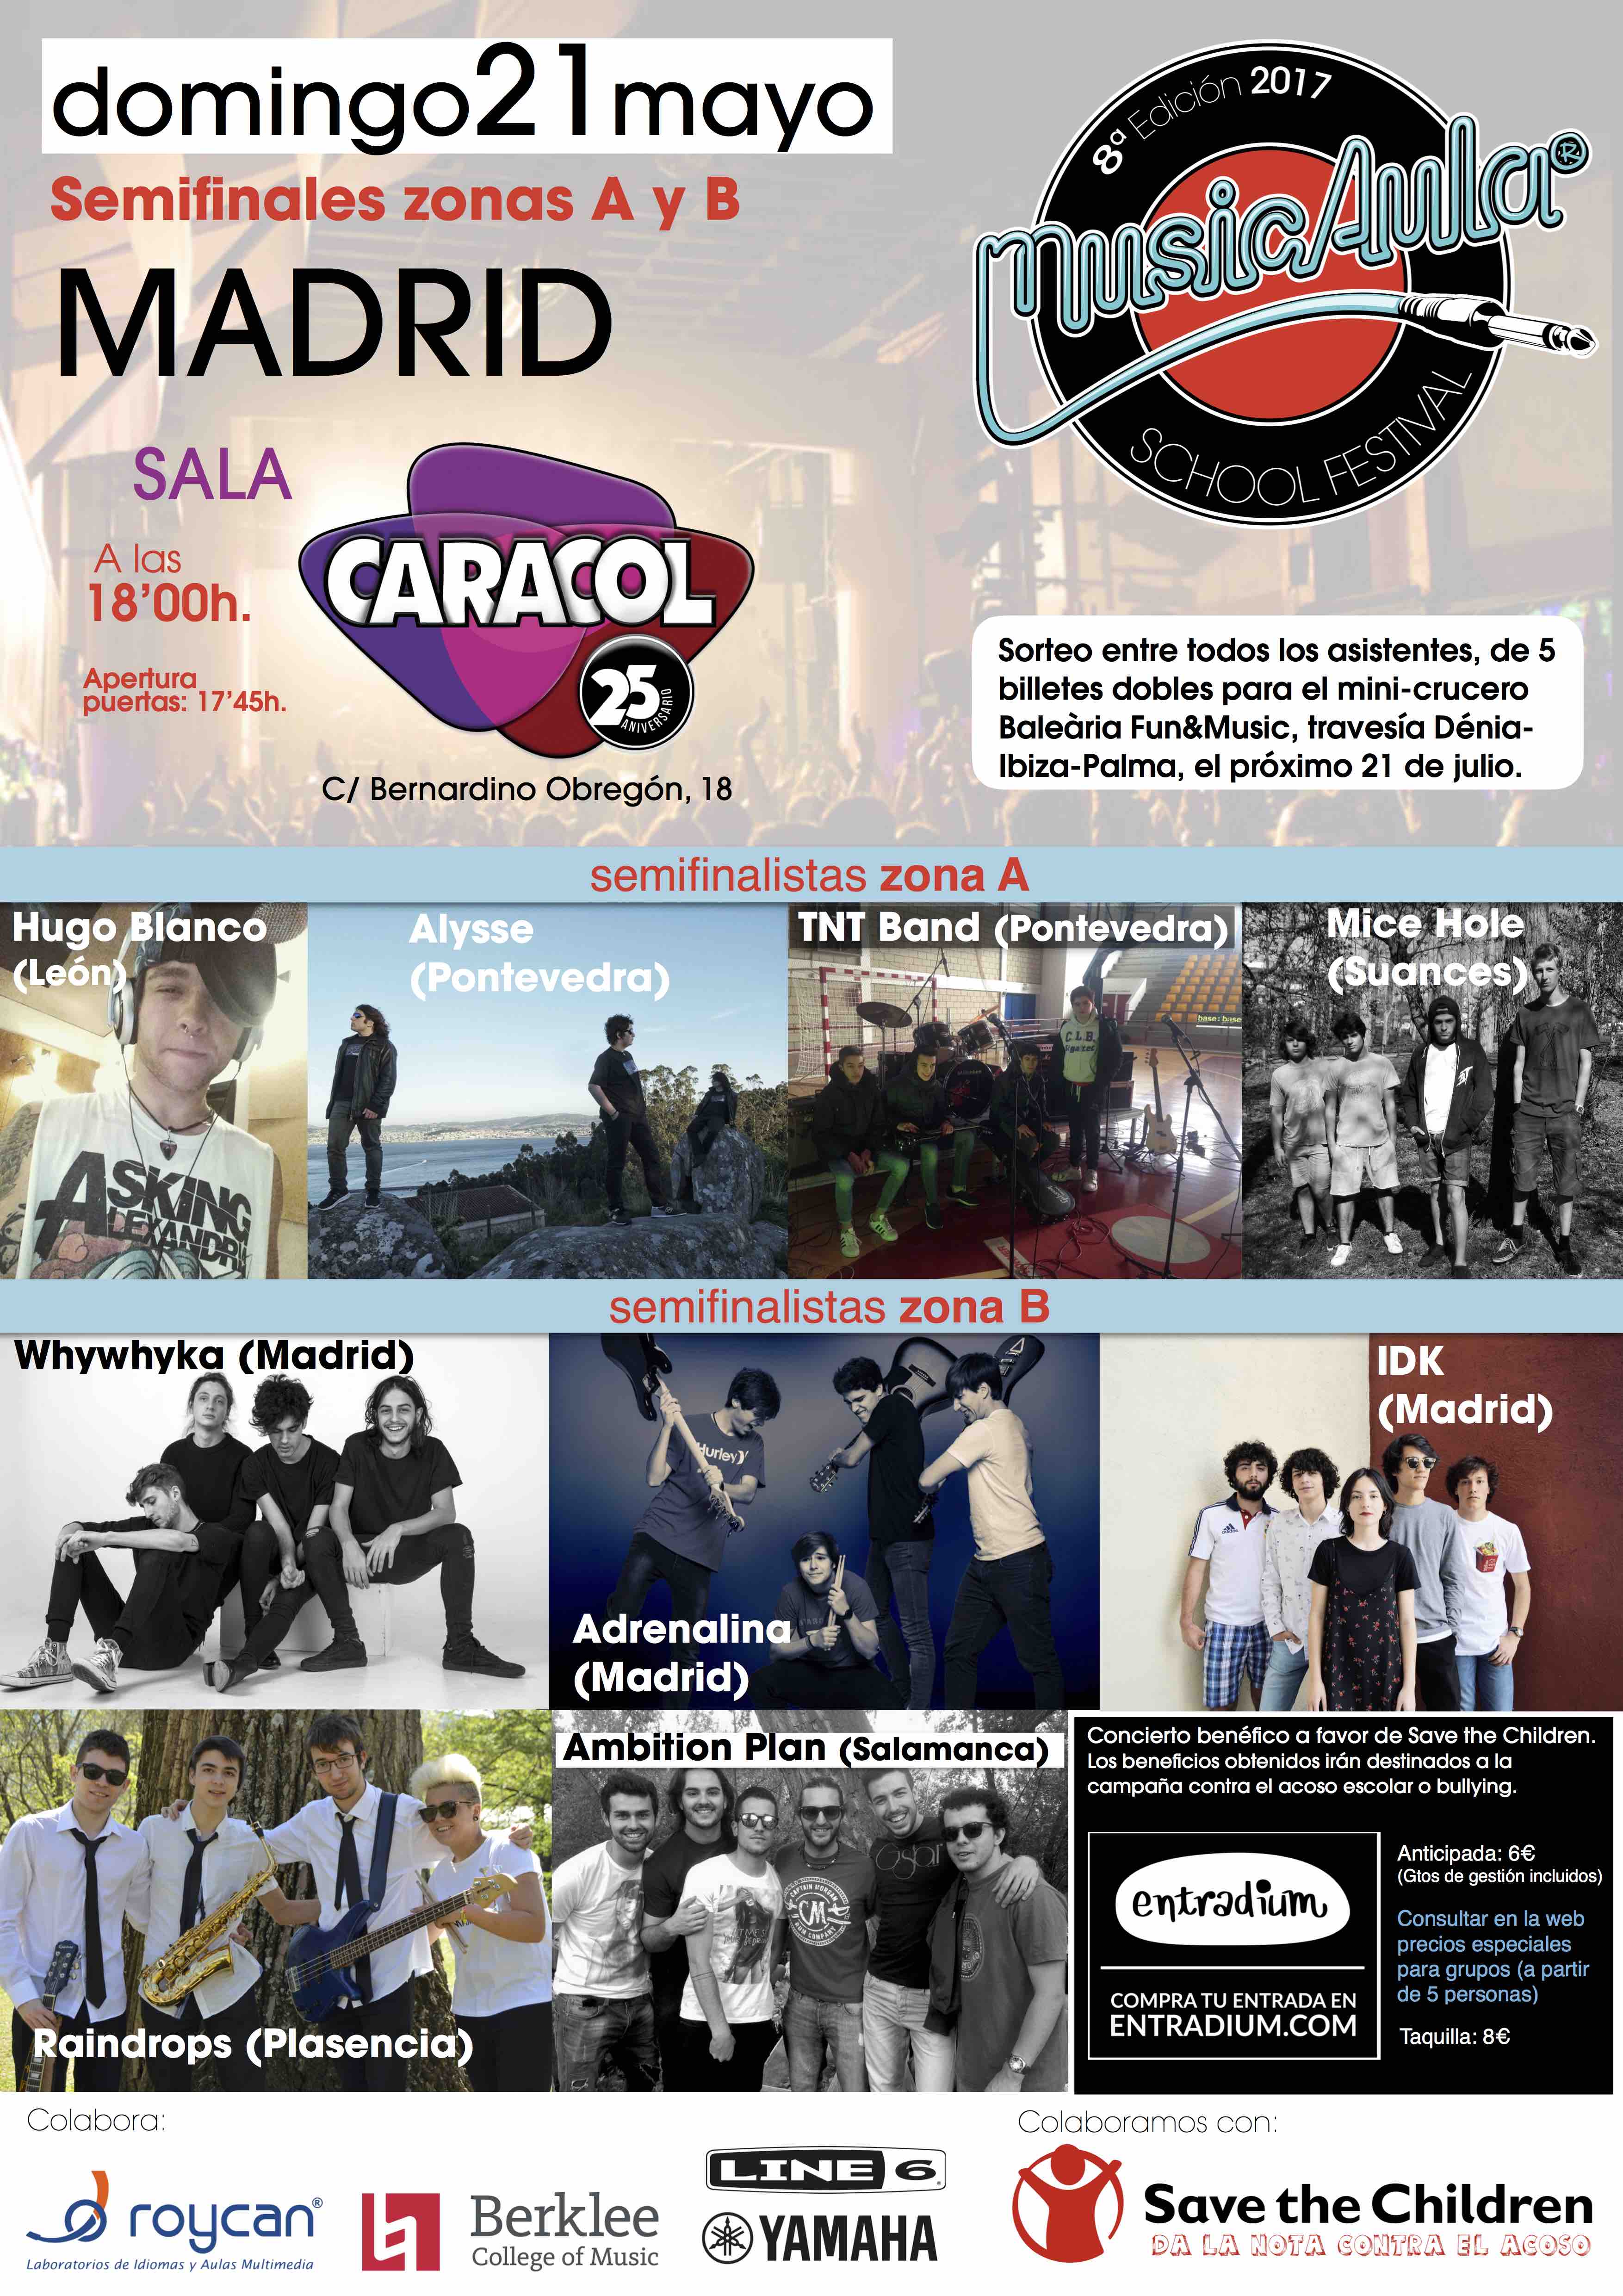 Cartel promocional MusicAula para la semifinal de Madrid